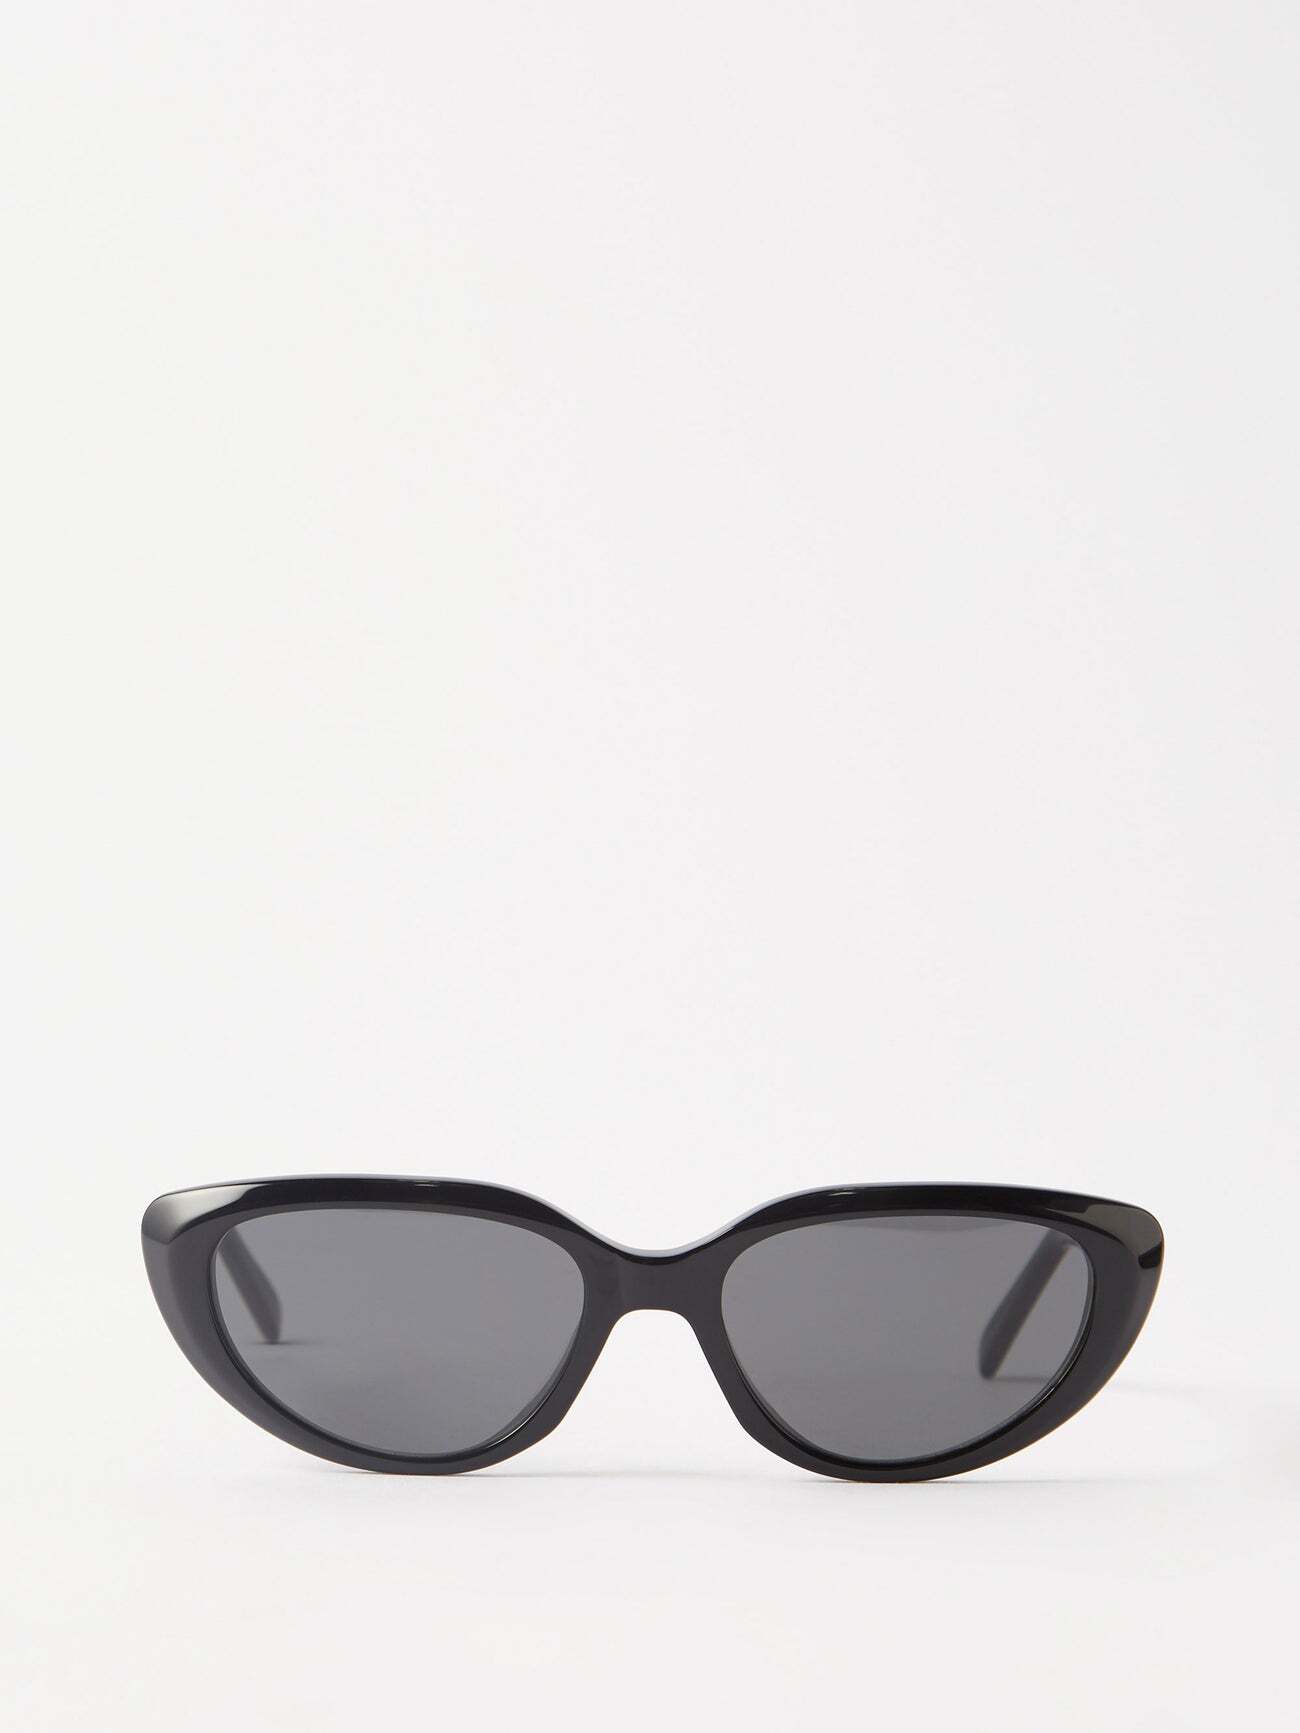 Celine Eyewear - Bold Story Angular Acetate Sunglasses - Womens - Black